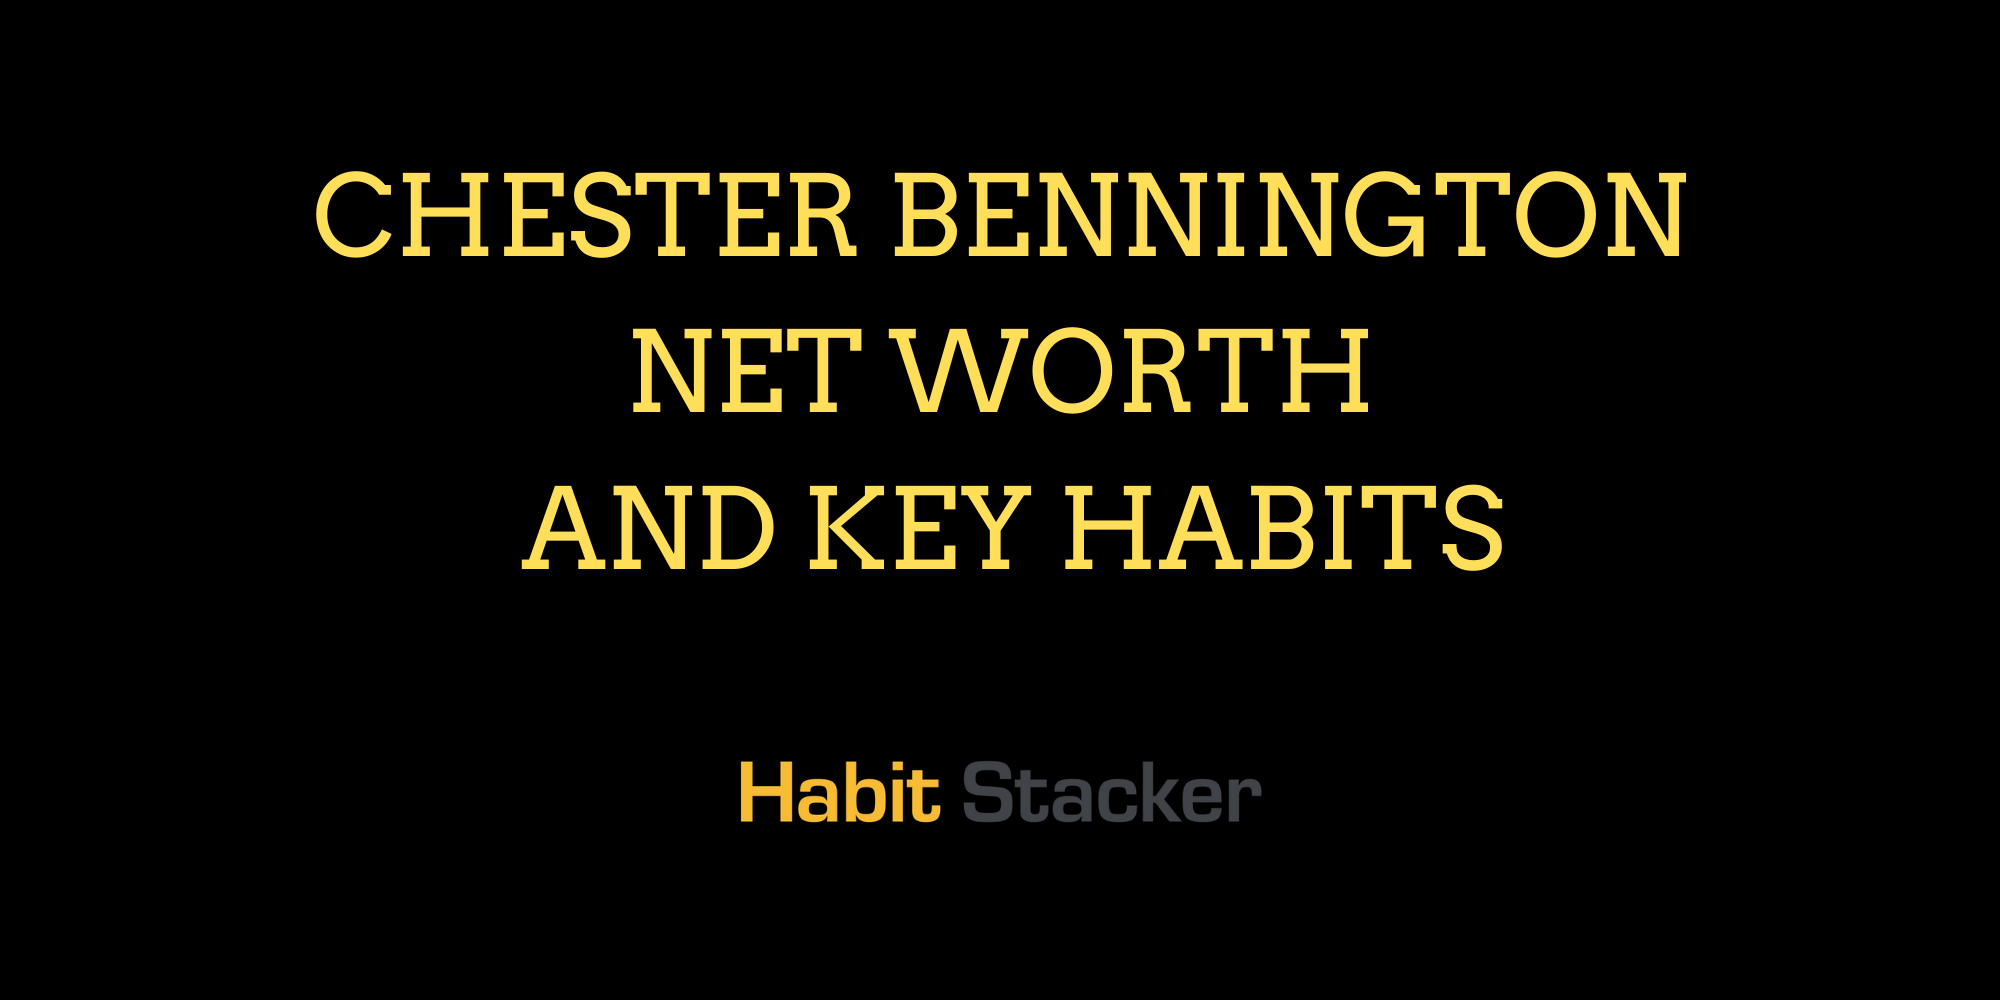 Chester Bennington Net Worth and Key Habits